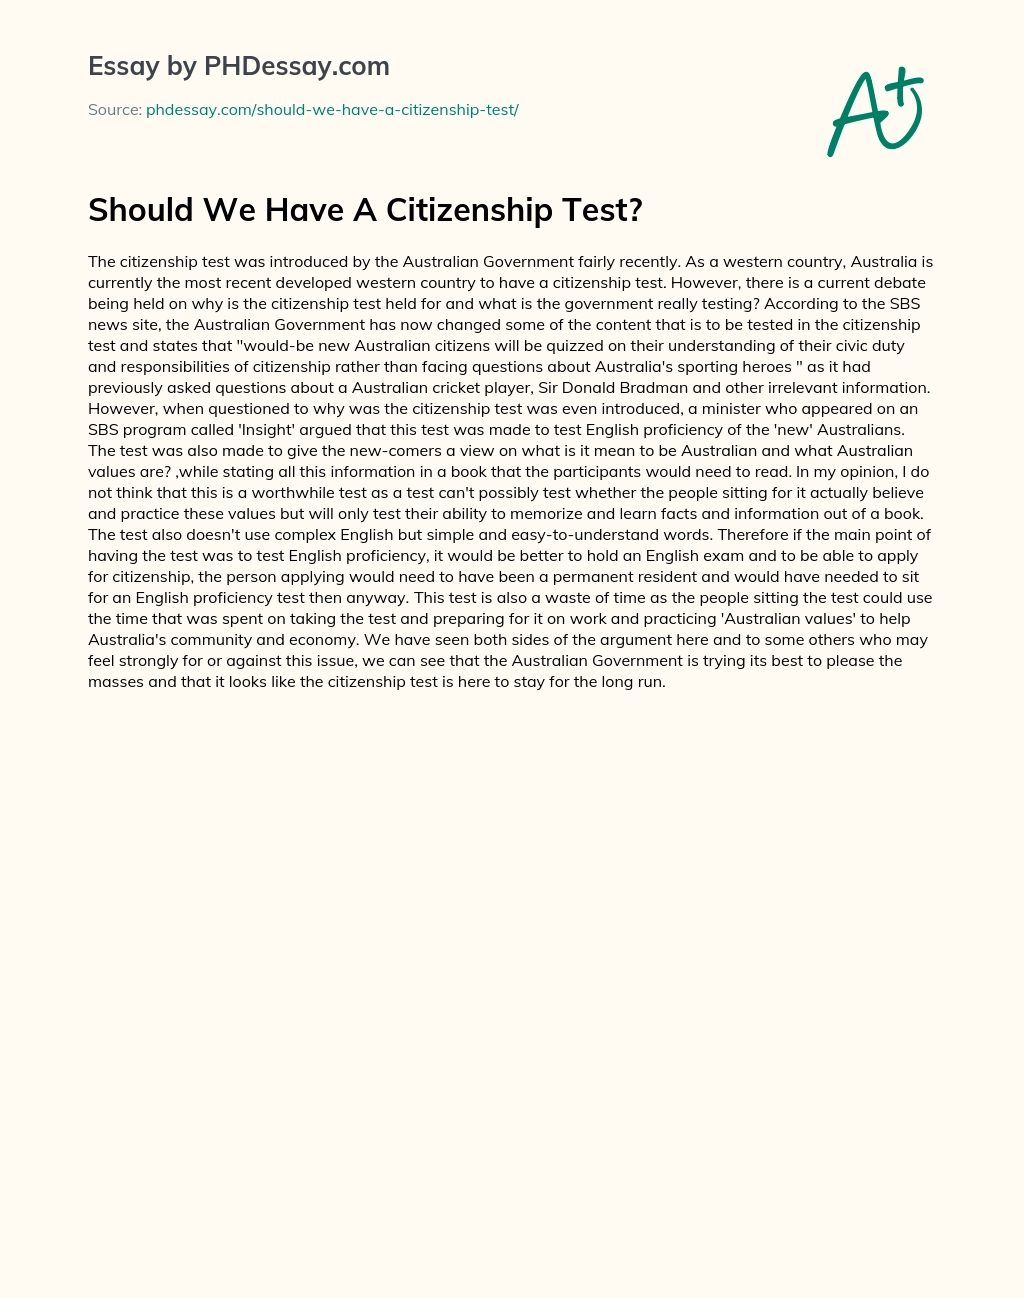 Should We Have A Citizenship Test? essay